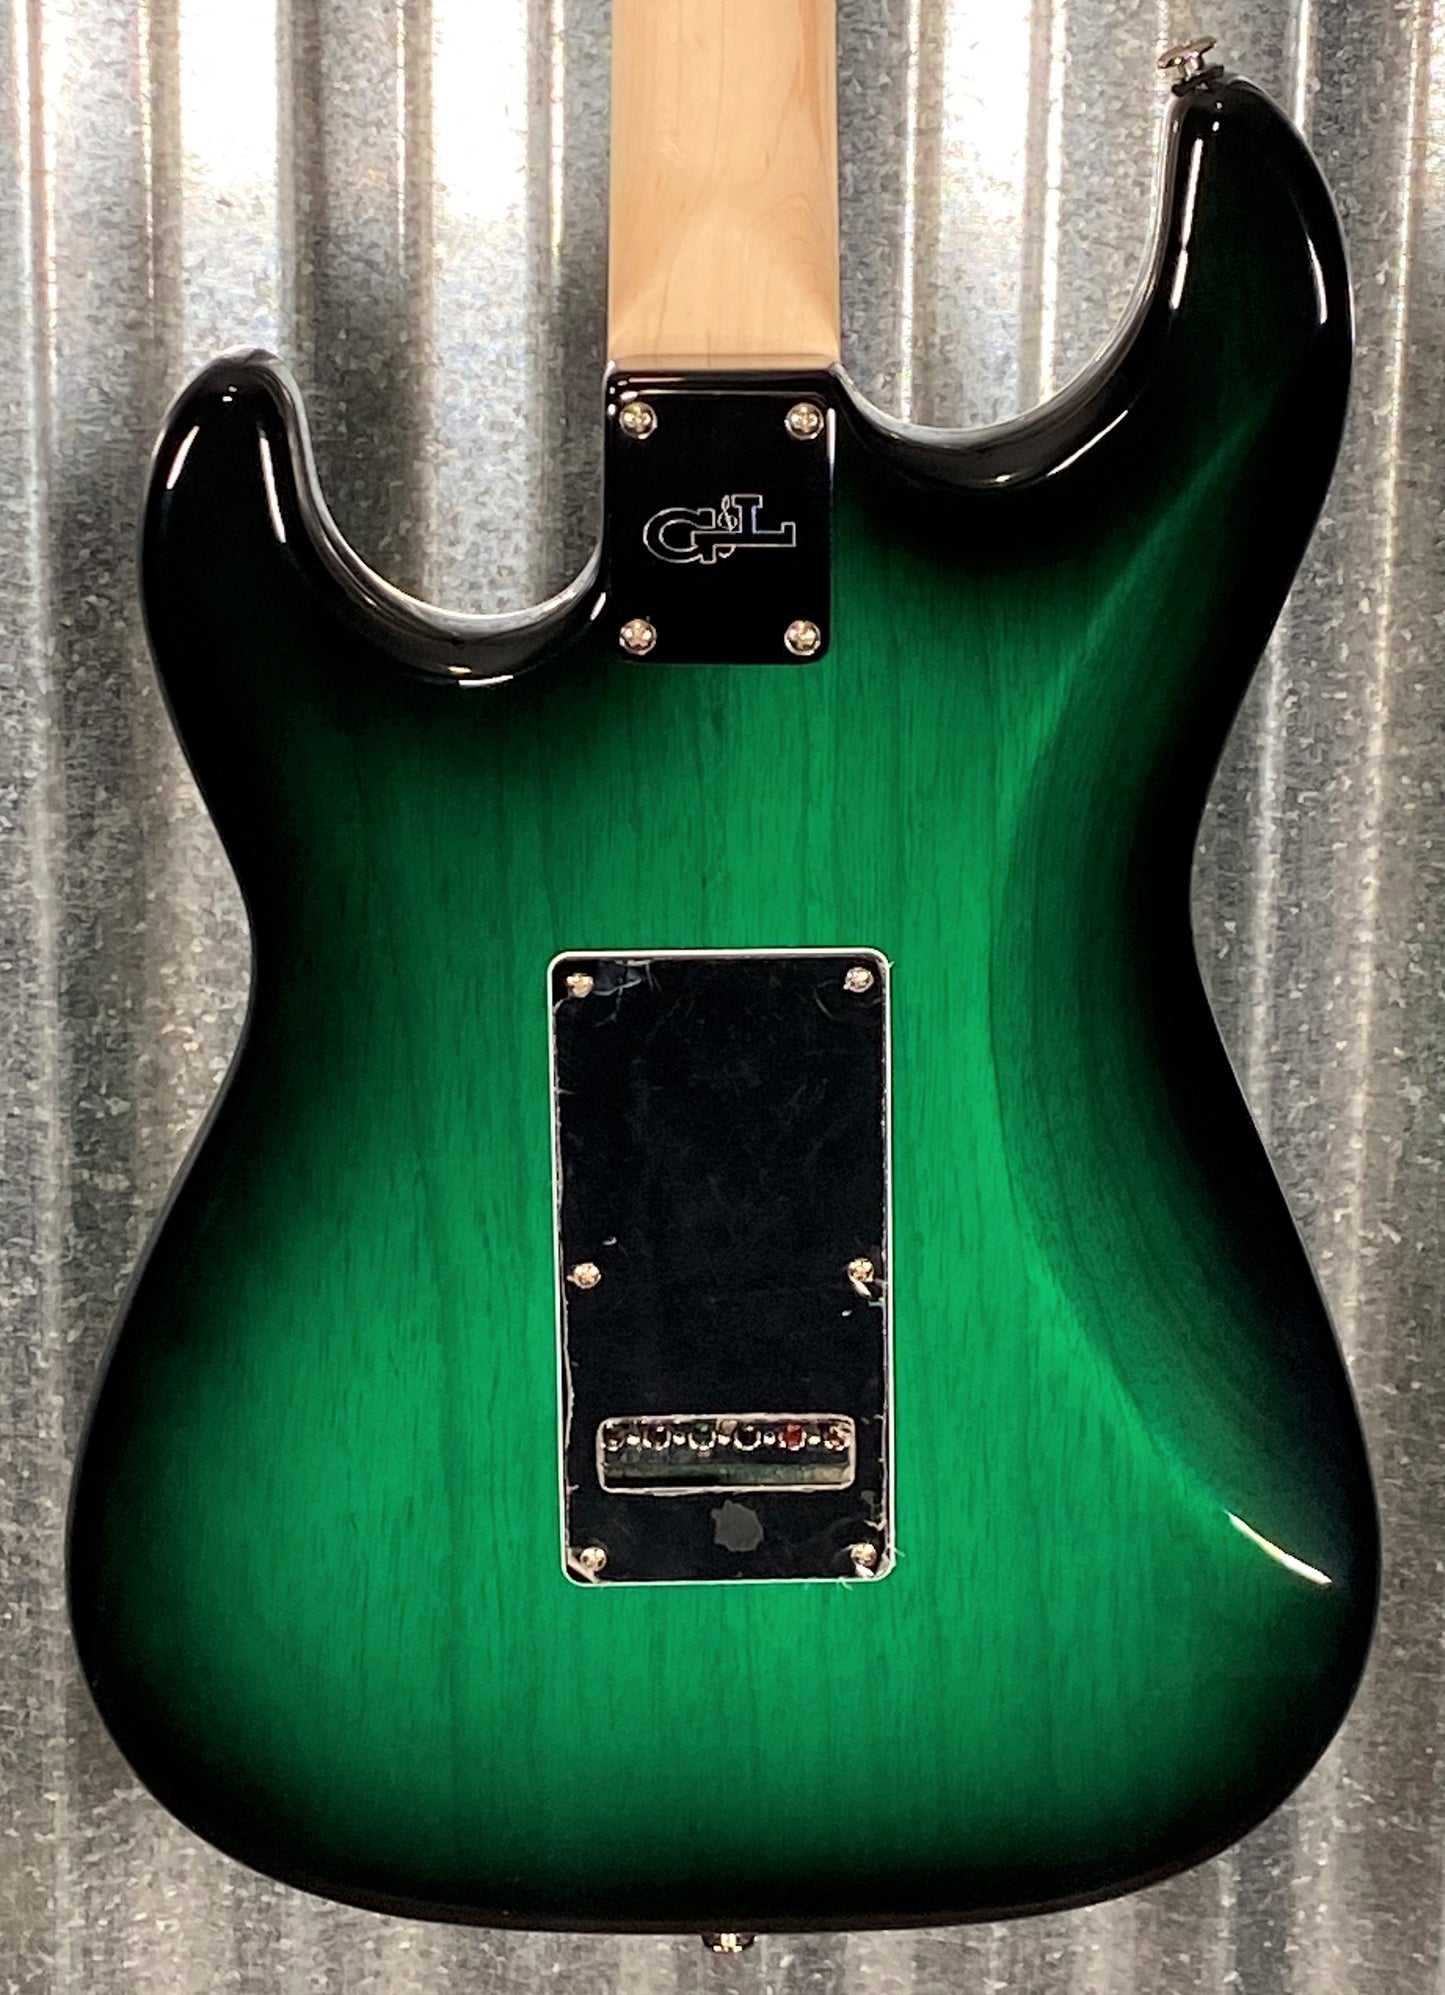 G&L USA Legacy Greenburst Guitar & Case #8024